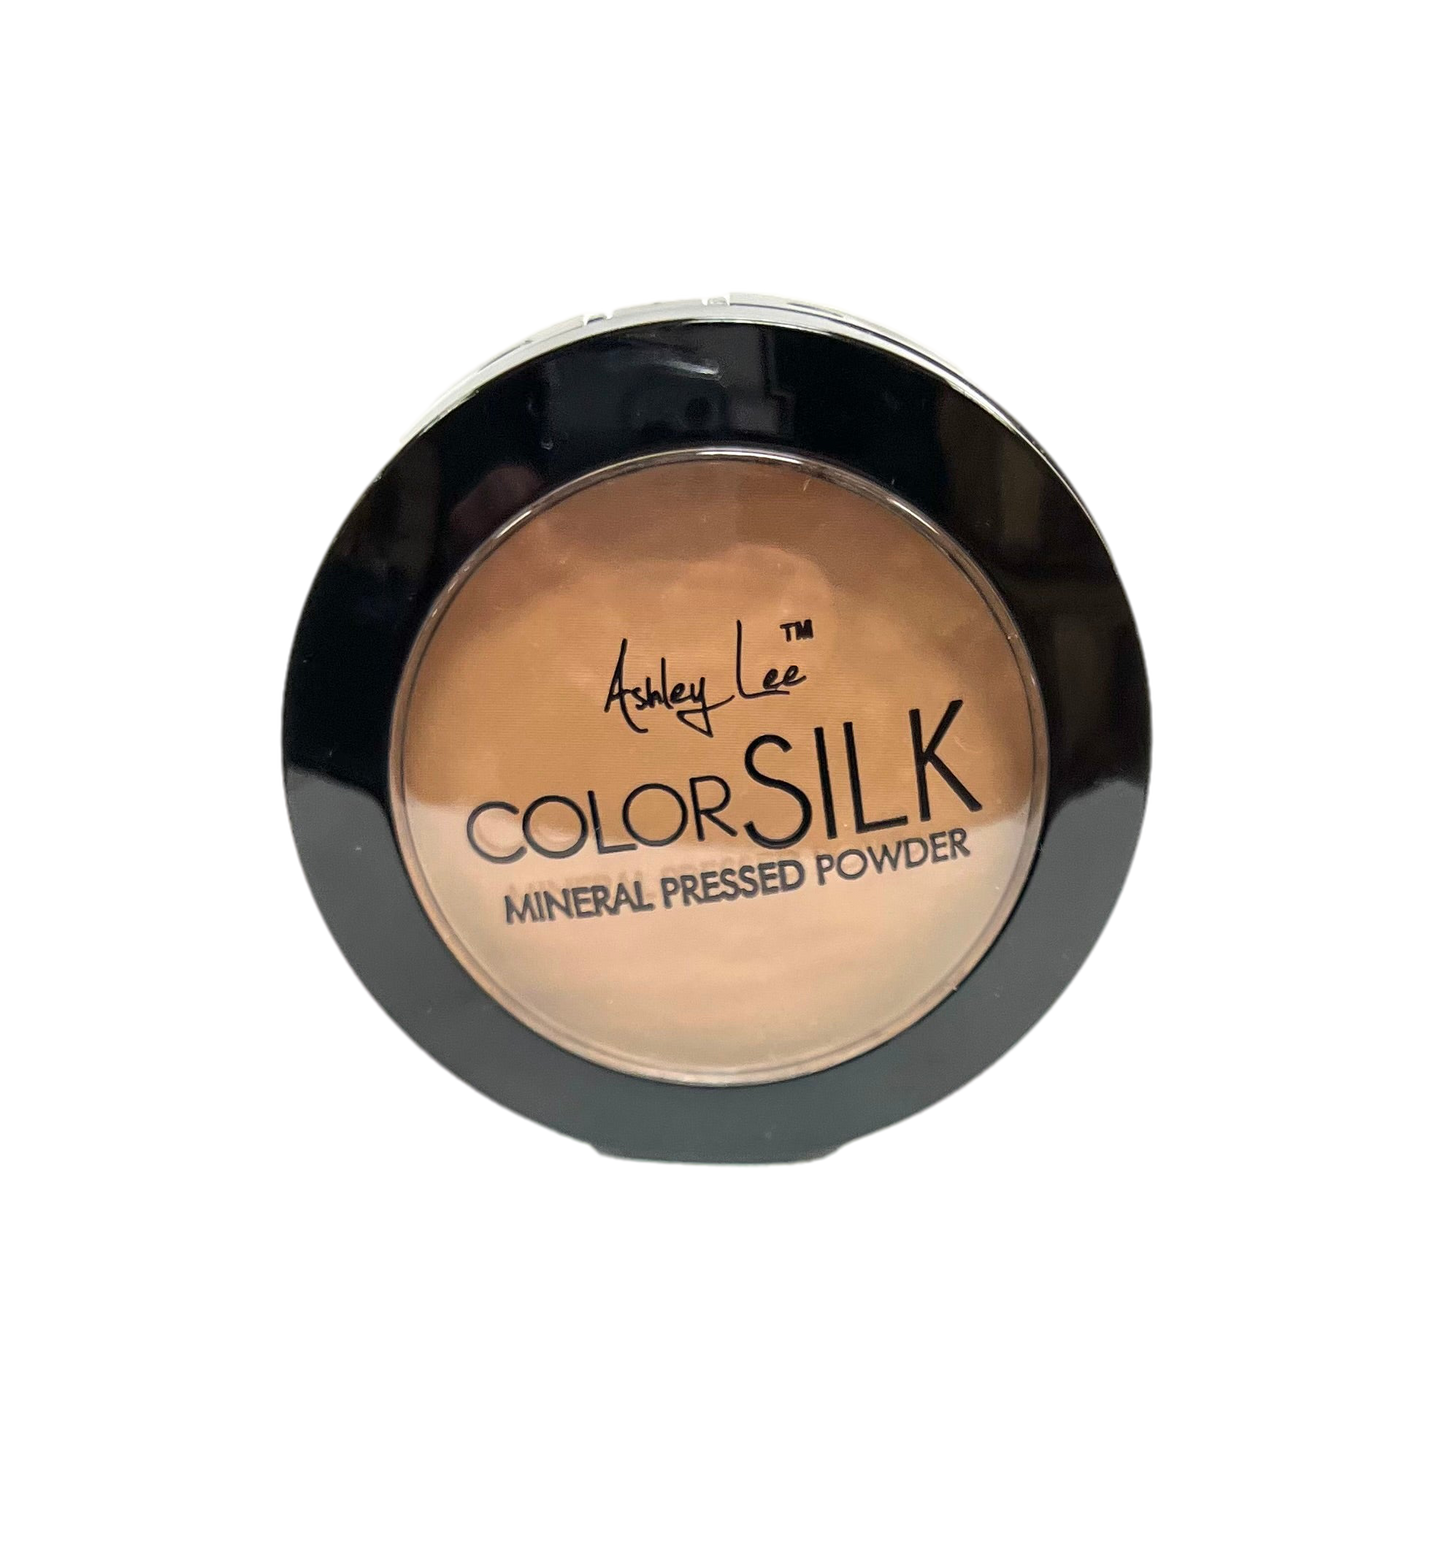 Ashley Lee Color Silk Mineral Pressed Powder